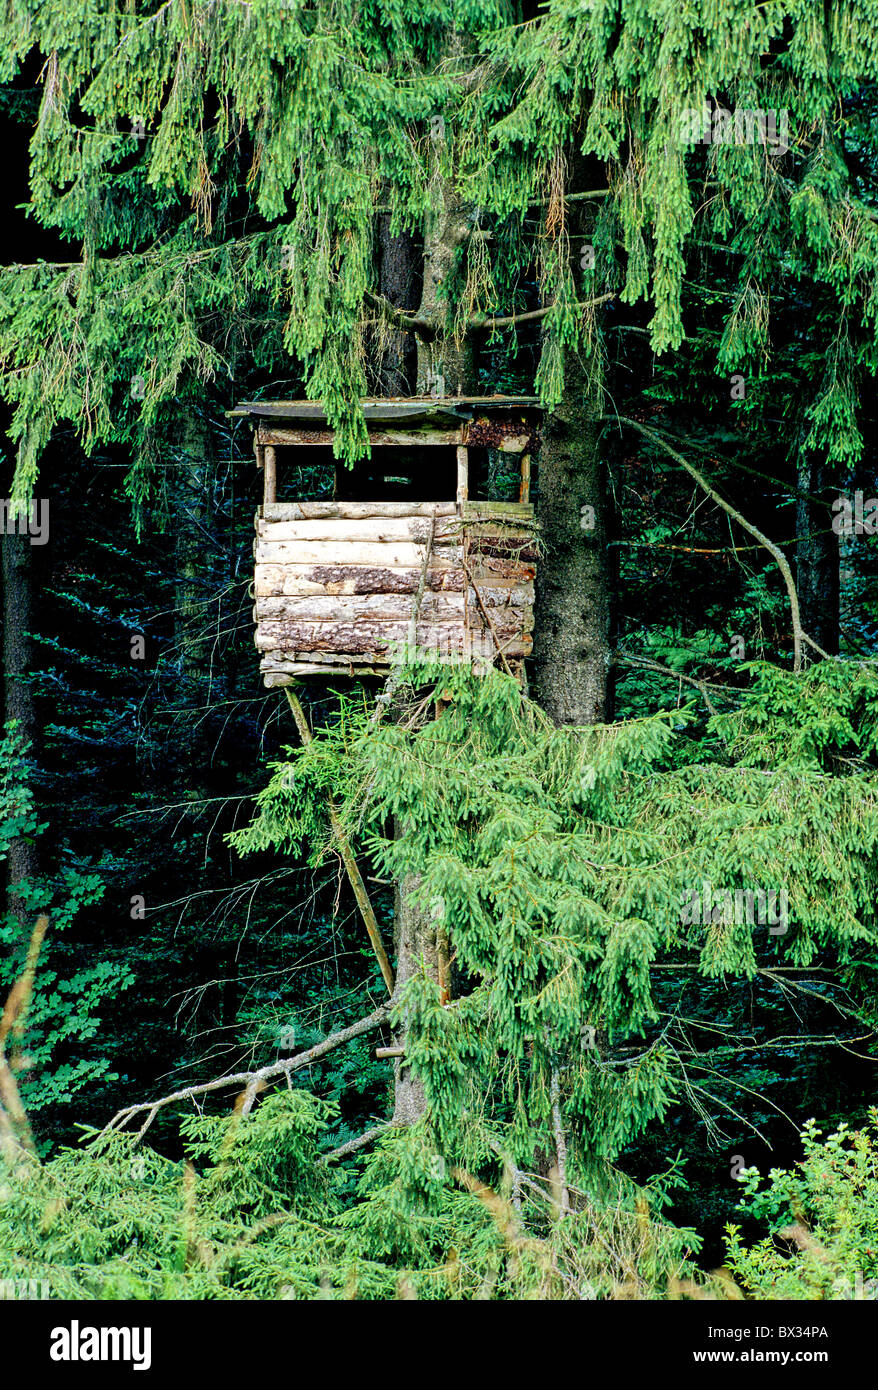 Siège haut cachette hut hunt chasseur carabinier bois chasse Forêt Noire Allemagne Europe Bade-wurtemberg Banque D'Images